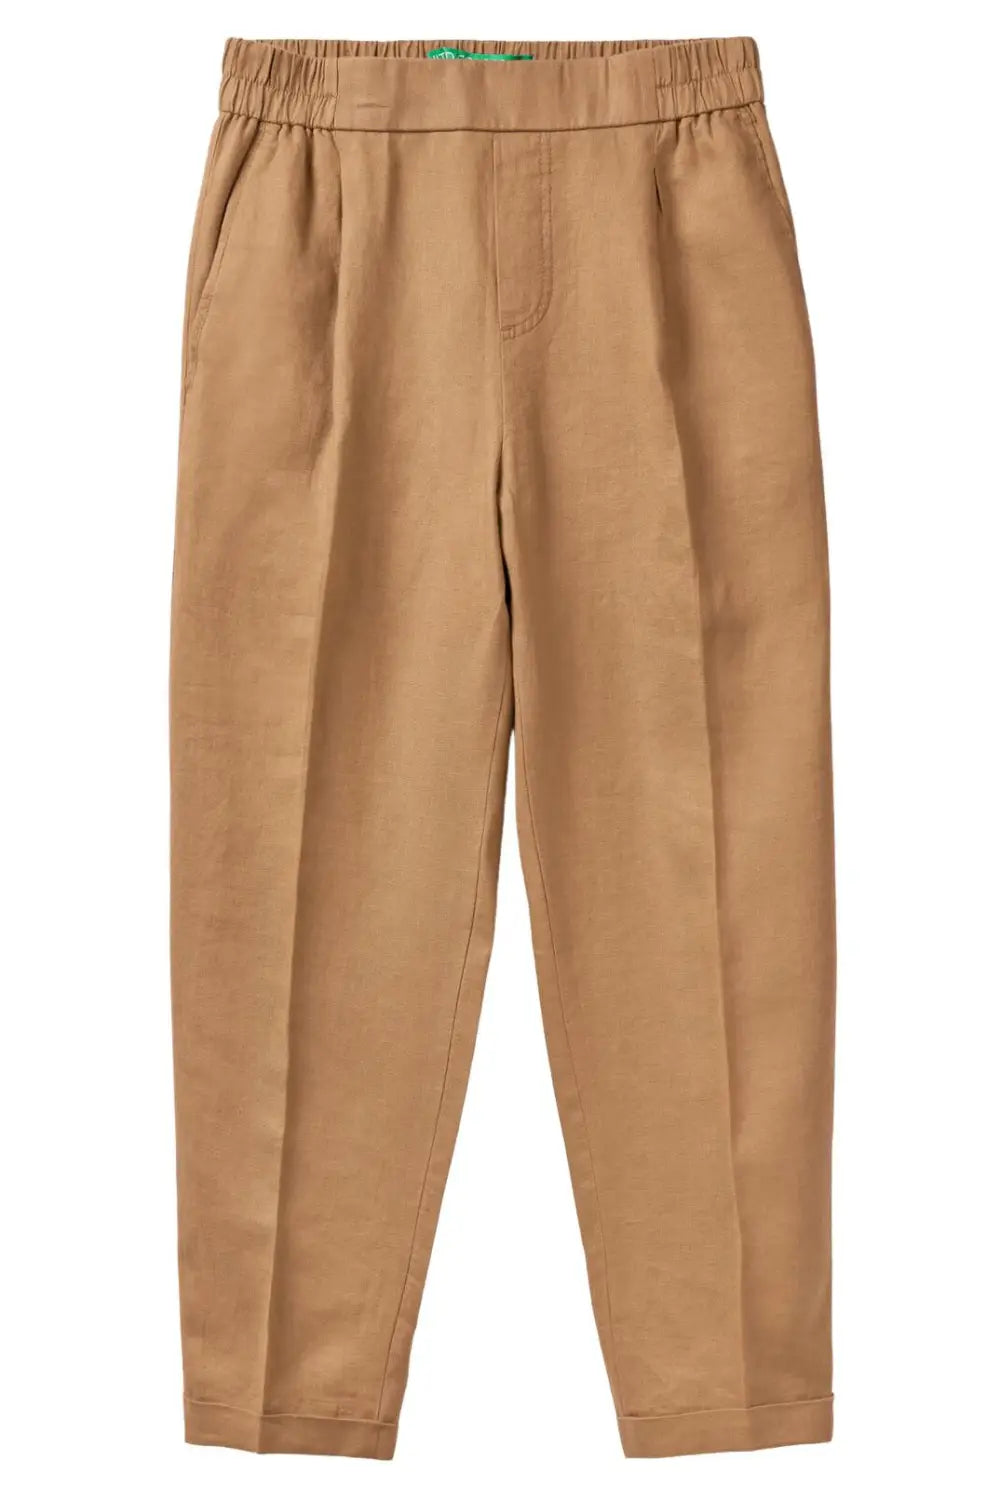 Benetton Linen Crop Trousers